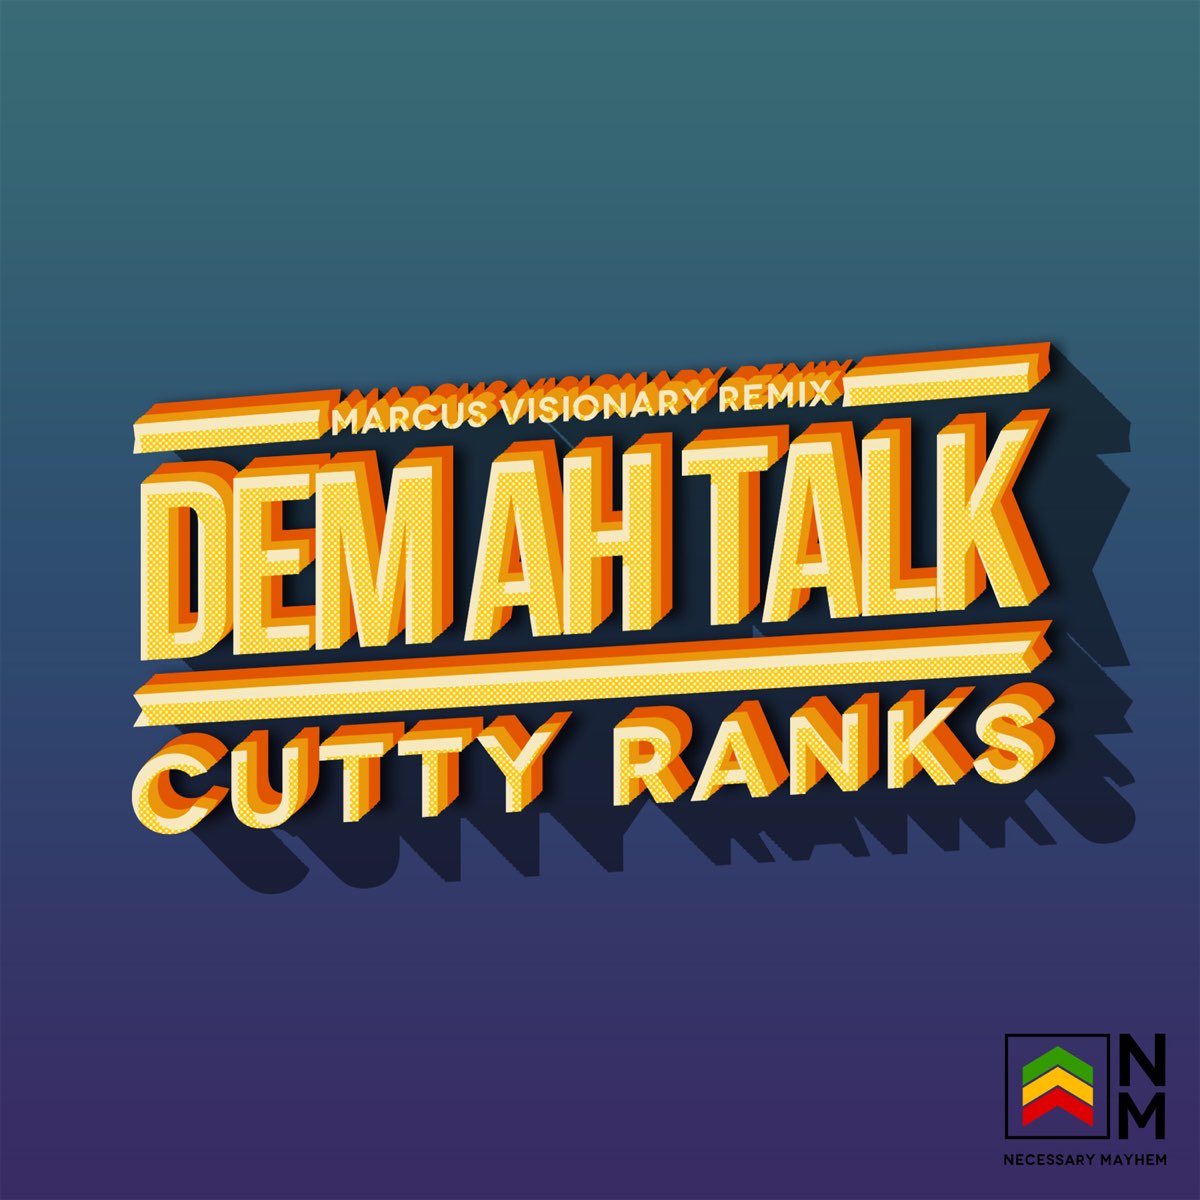 Cutty ranks тема. Cutty Ranks. Cutty logo.